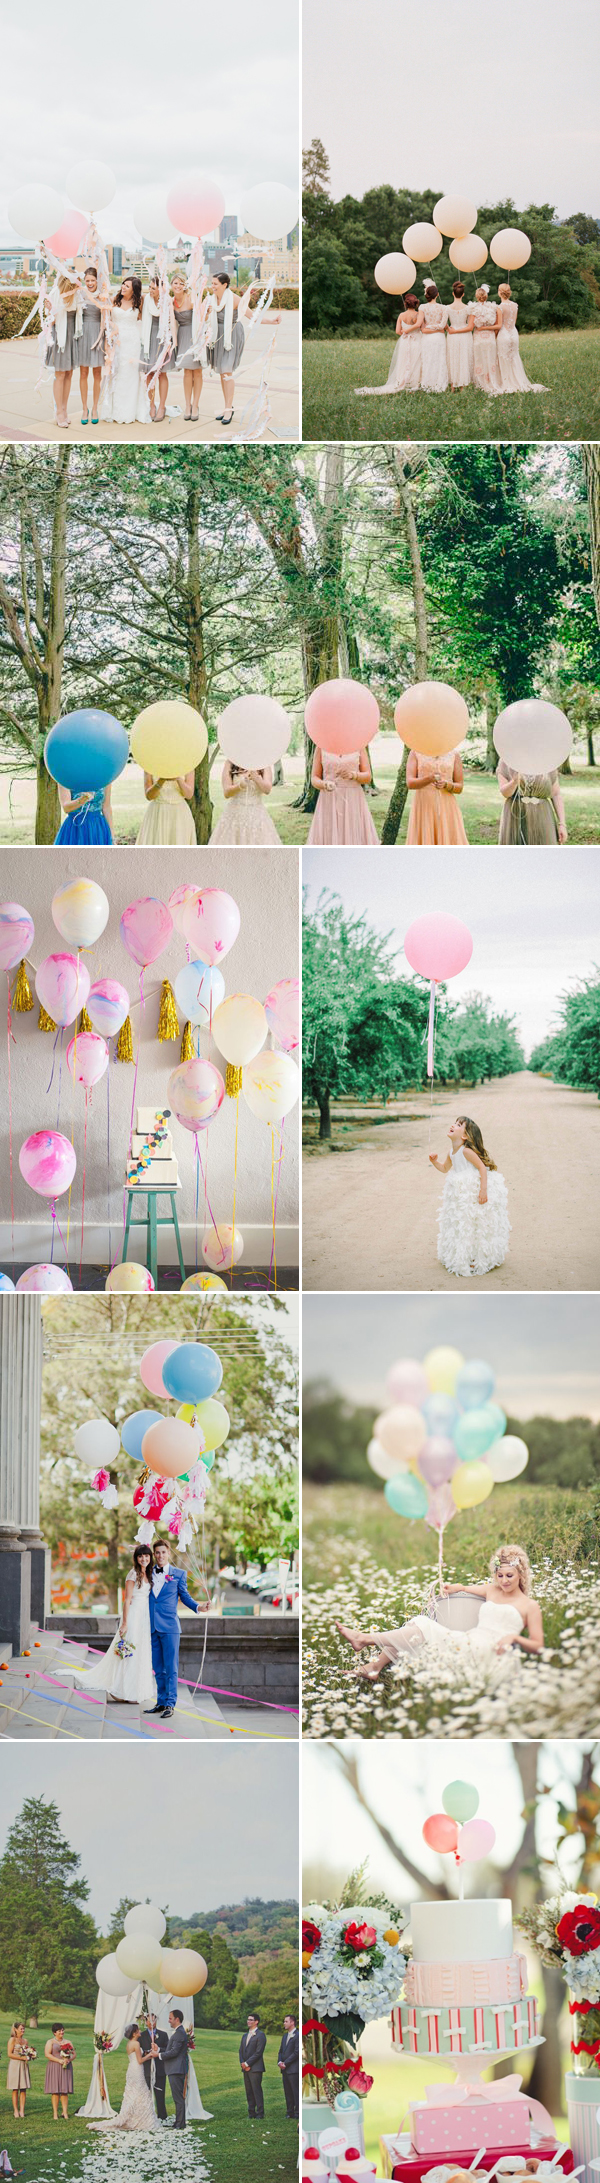 balloons01-pastel